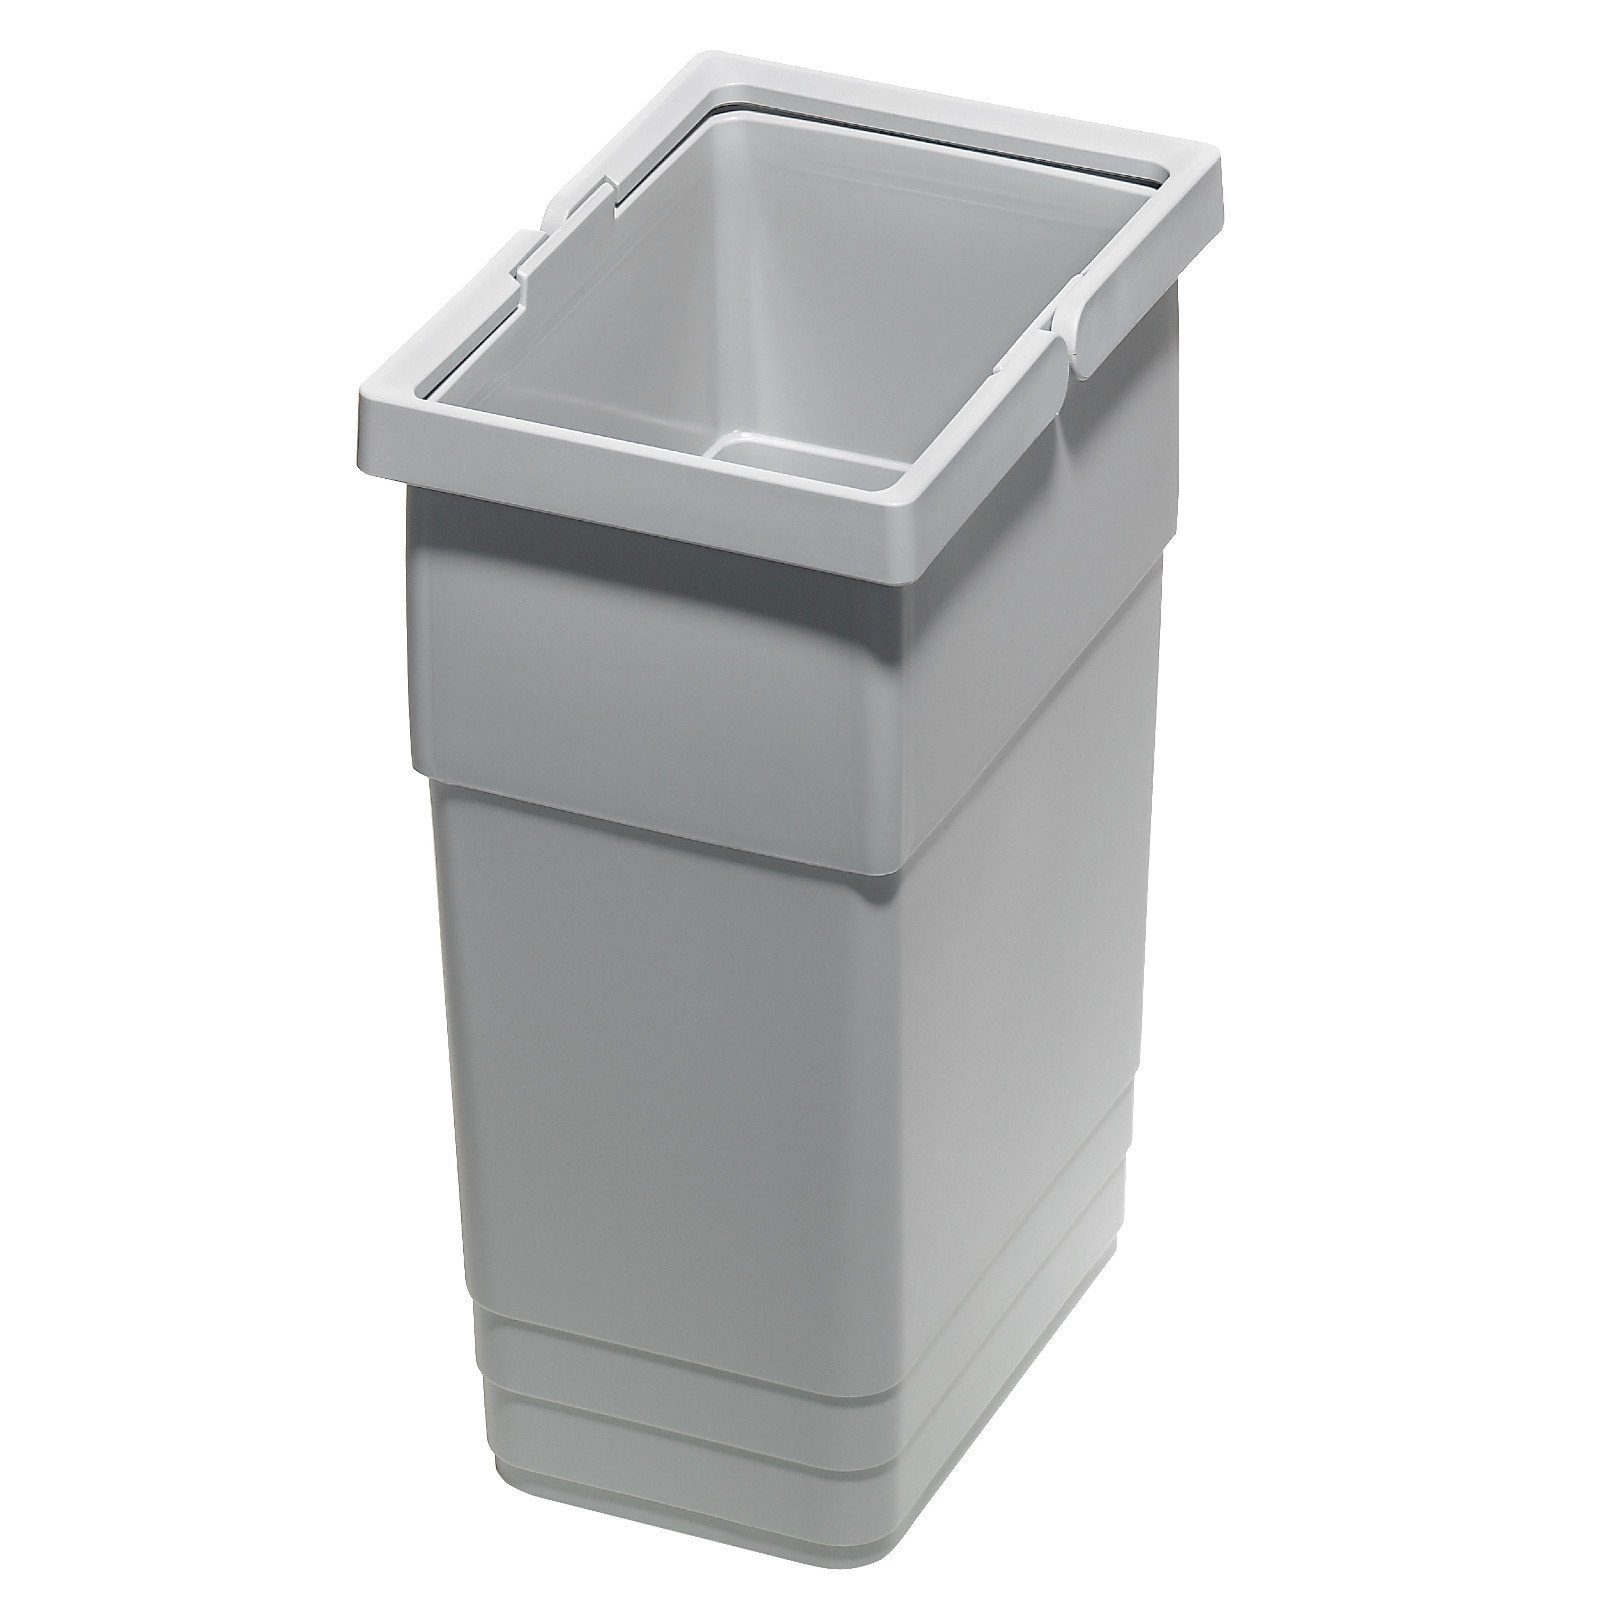 SO-TECH® Abfallsammler Abfalleimer Mülltrennsystem Abfalltrennsystem 5135.11 eins2vier für